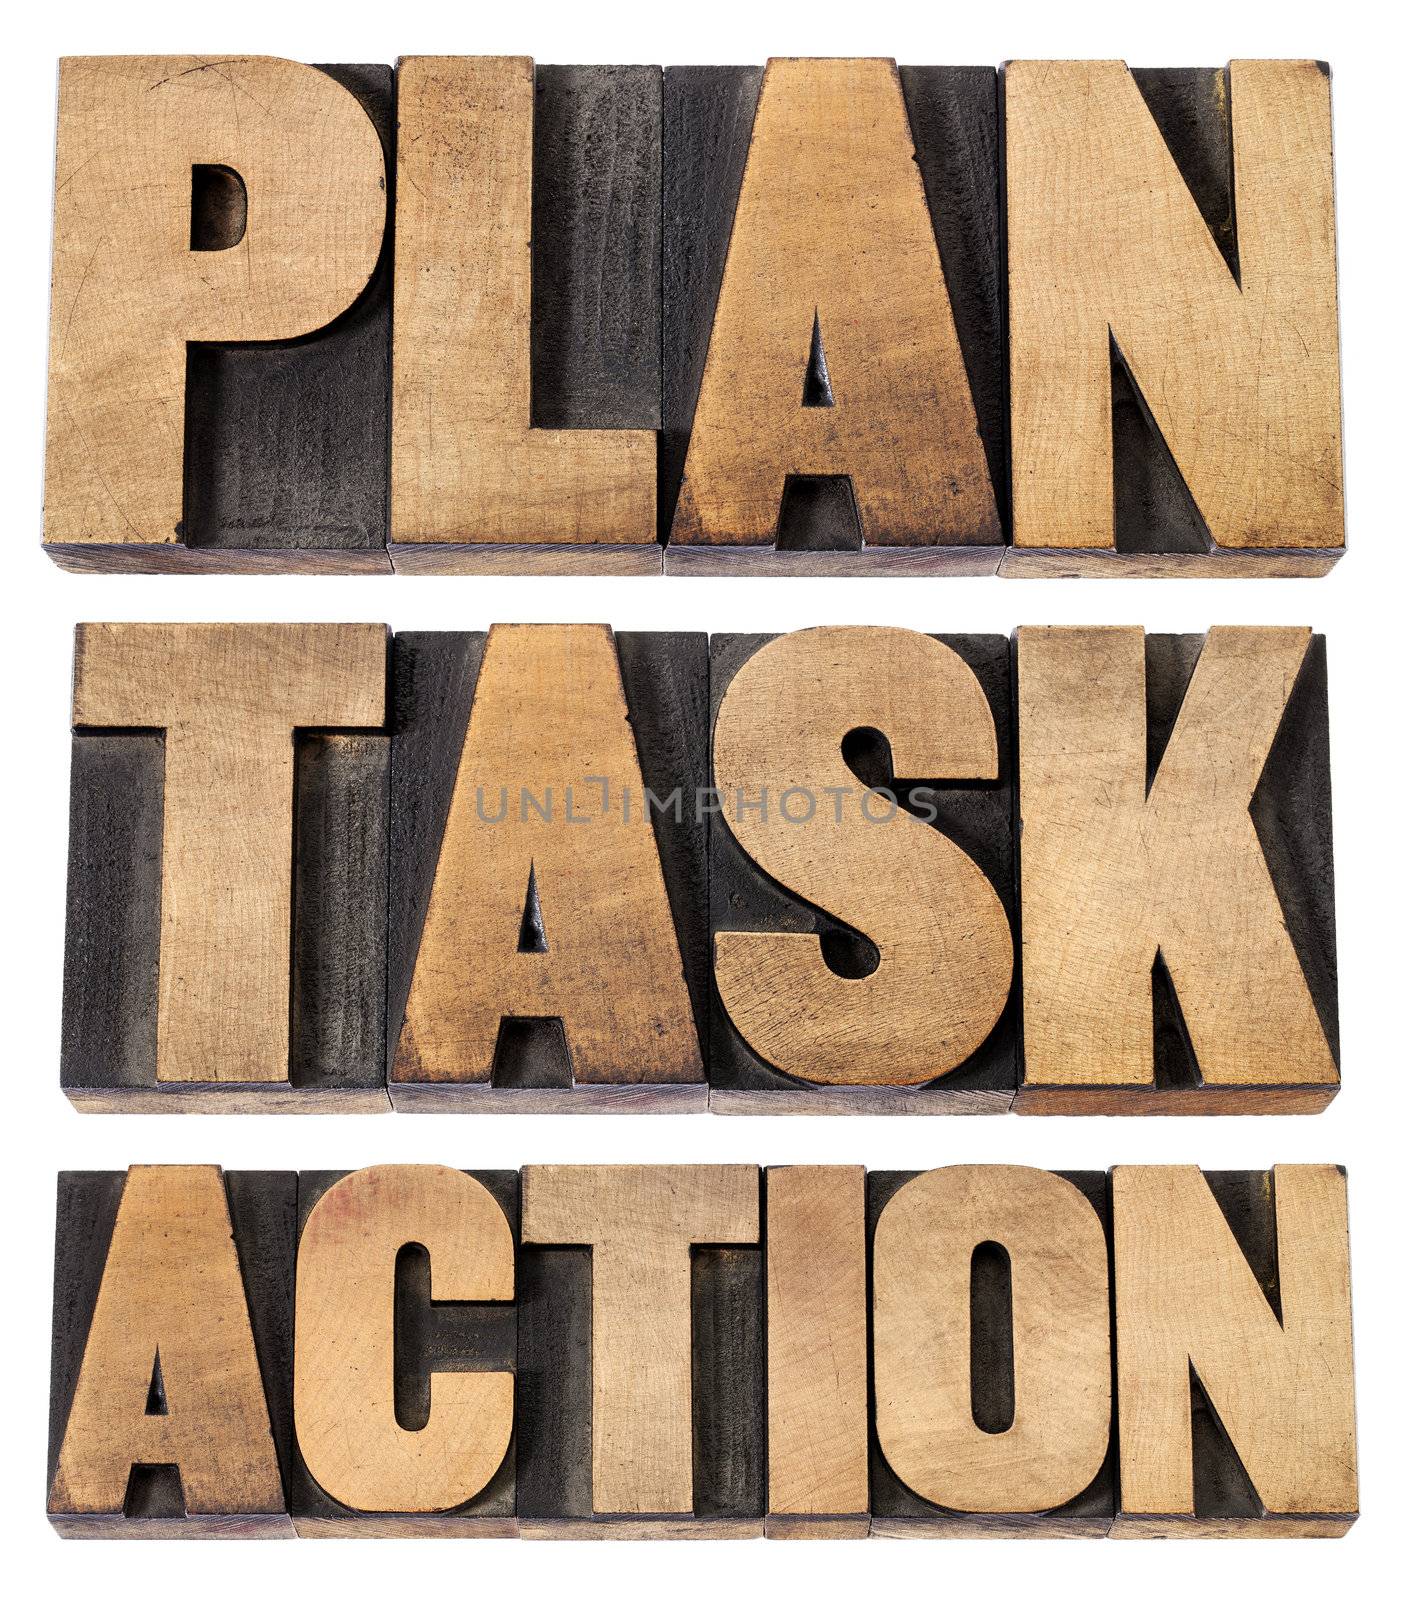 plan, task, action word in woot type by PixelsAway